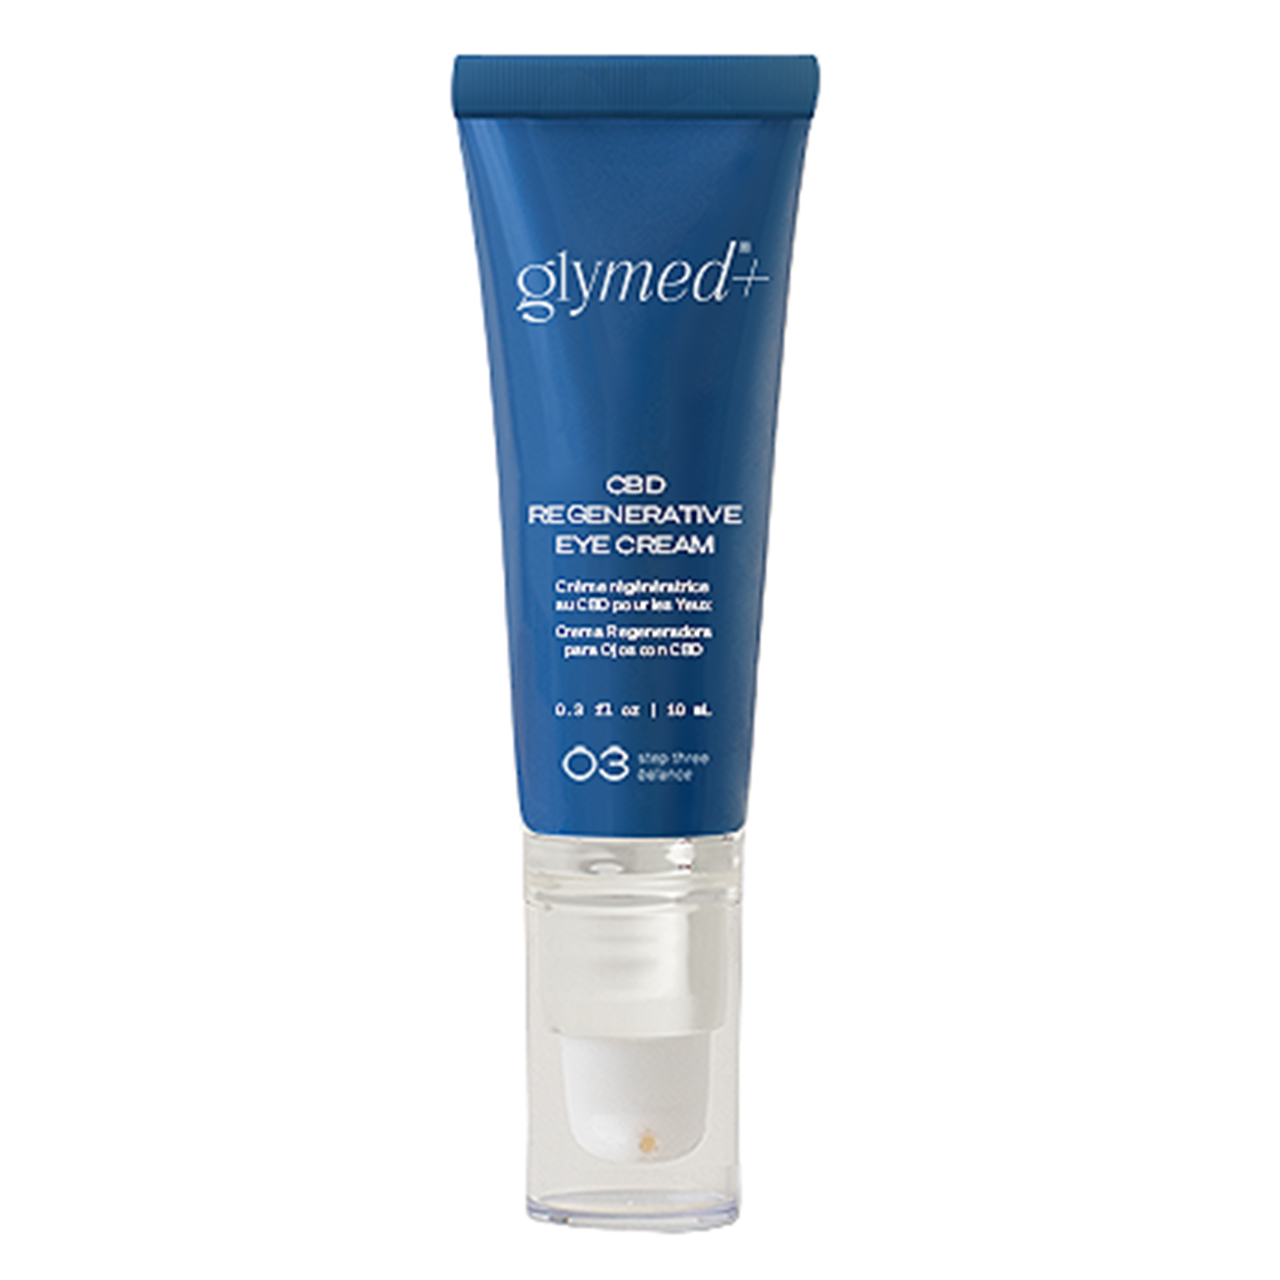 Glymed Plus HEMP Regenerative Eye Cream - .3 oz Questions & Answers